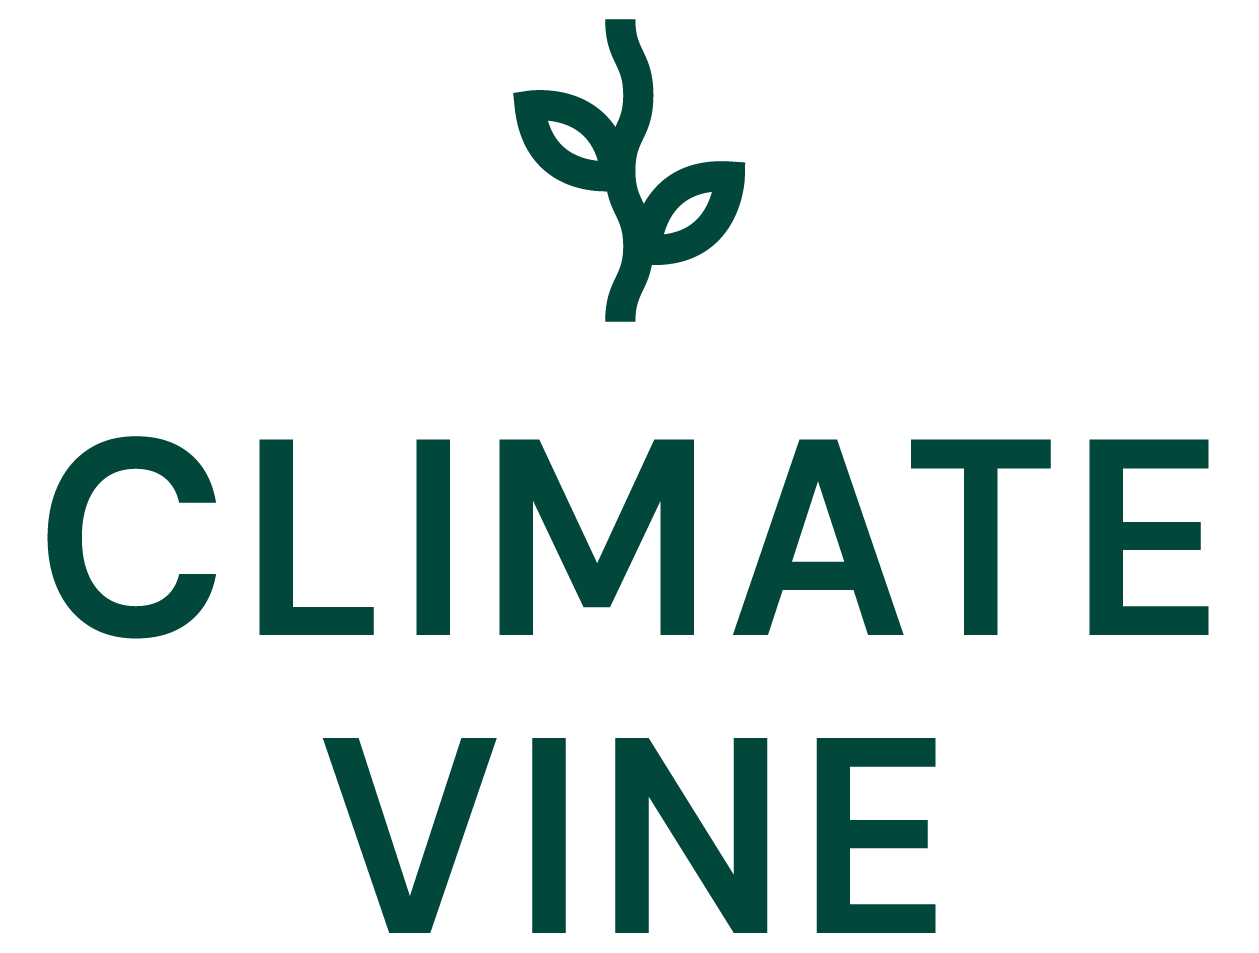 Climate Vine logo